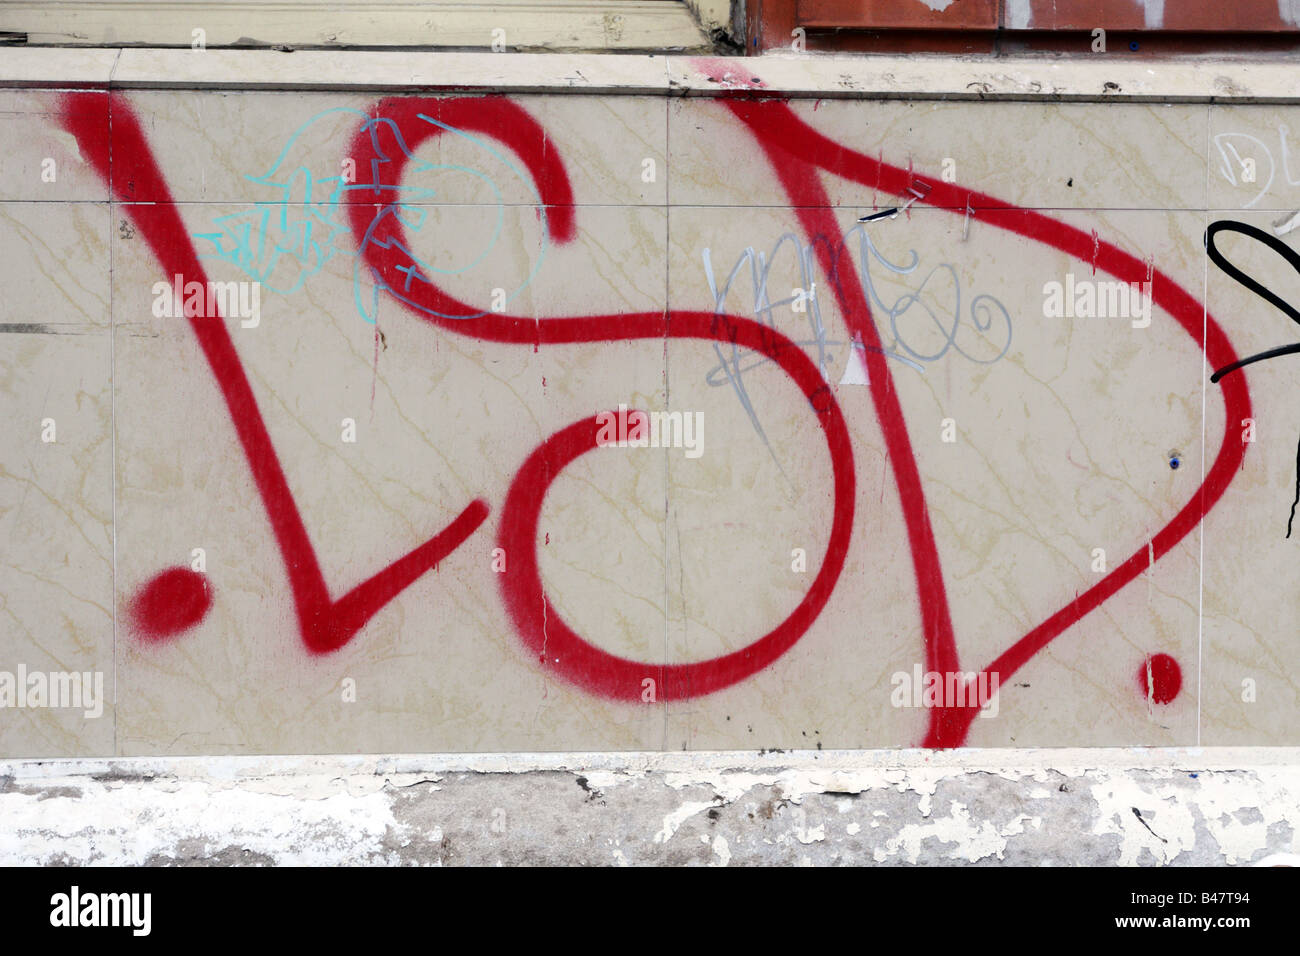 Graffiti scrawl of LSD aka Lysergic acid diethylamide on urban wall in Toronto Canada Stock Photo